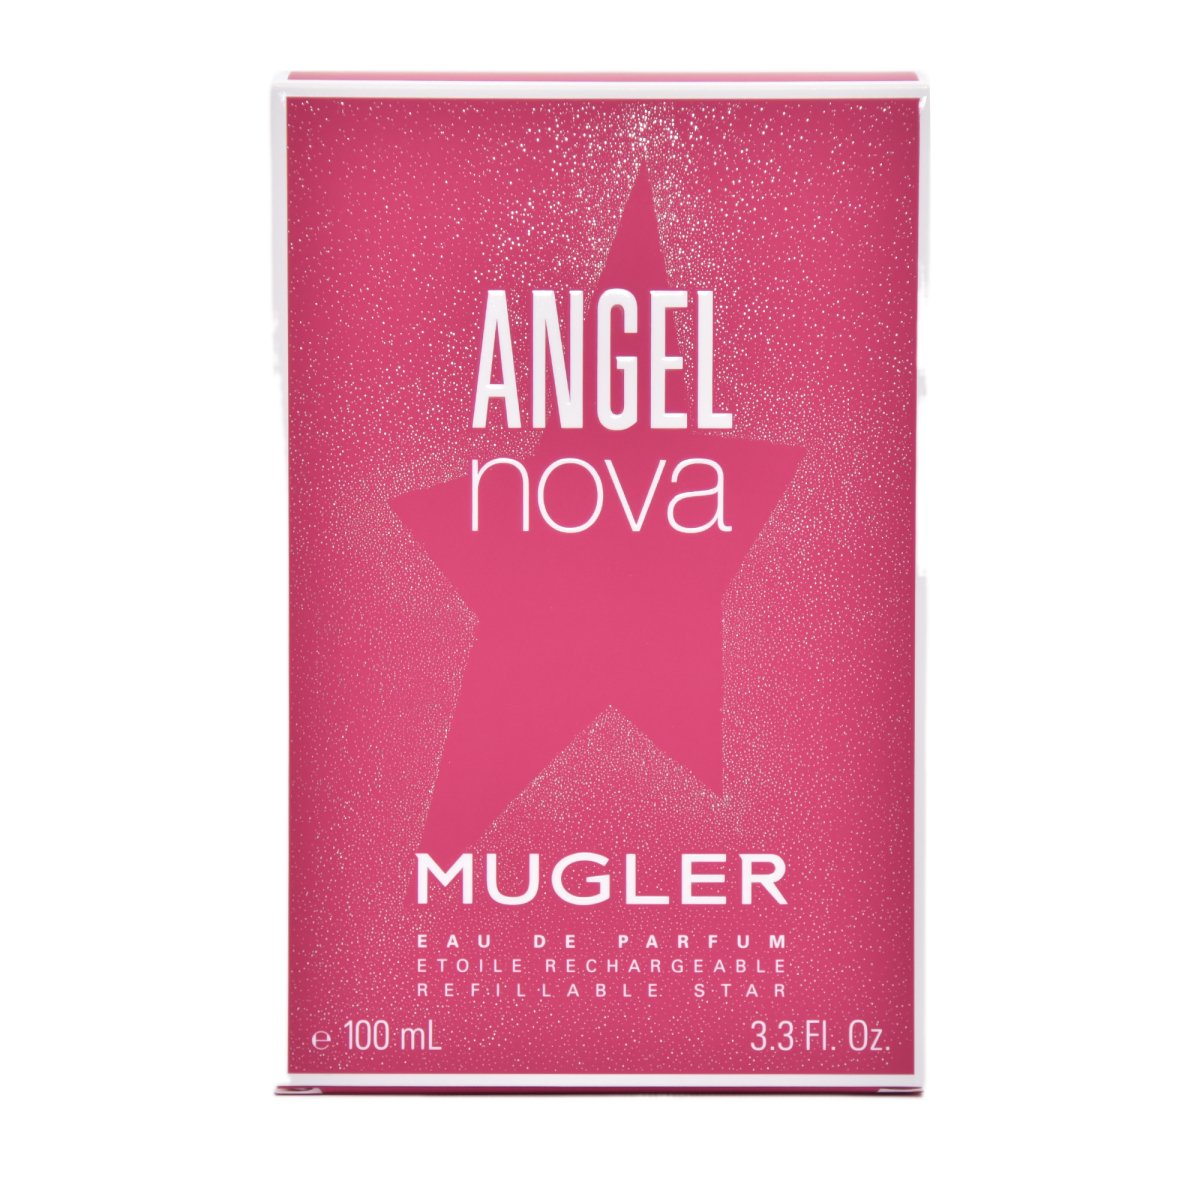 Angel Nova by Thierry Mugler Eau De Parfum Refillable 3.4oz/100 ML - Perfume Headquarters - Thierry Mugler - 3439600049862 - Fragrance